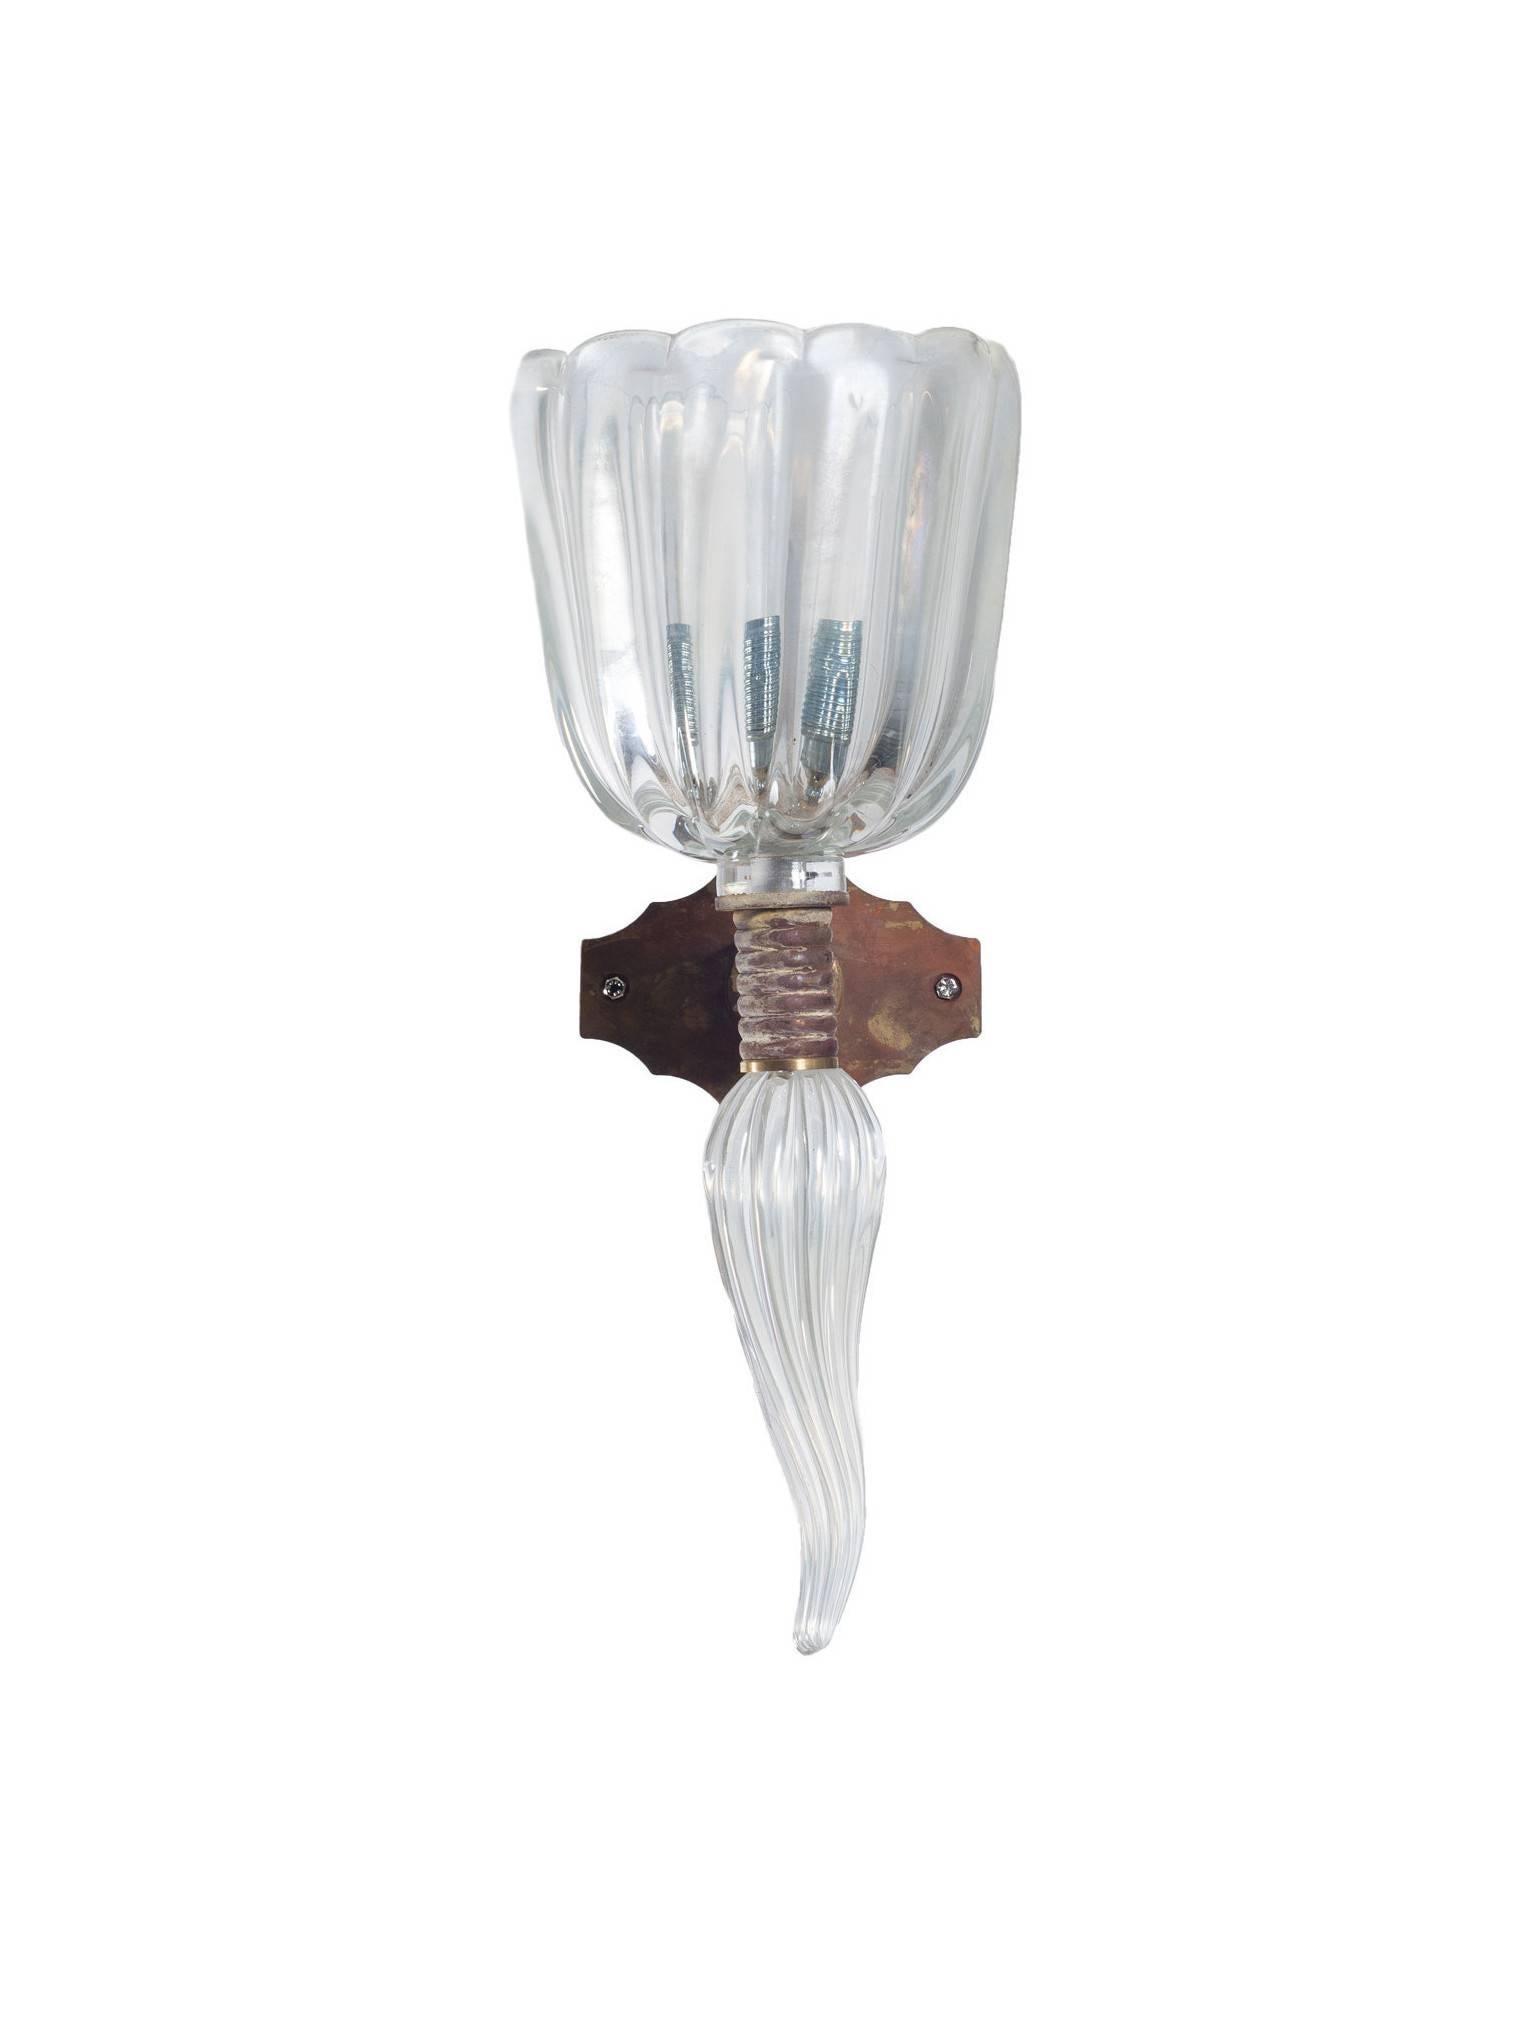 Art Deco Italian Venetian Sconces in Blown Murano Glass Iridescent color, 1960s For Sale